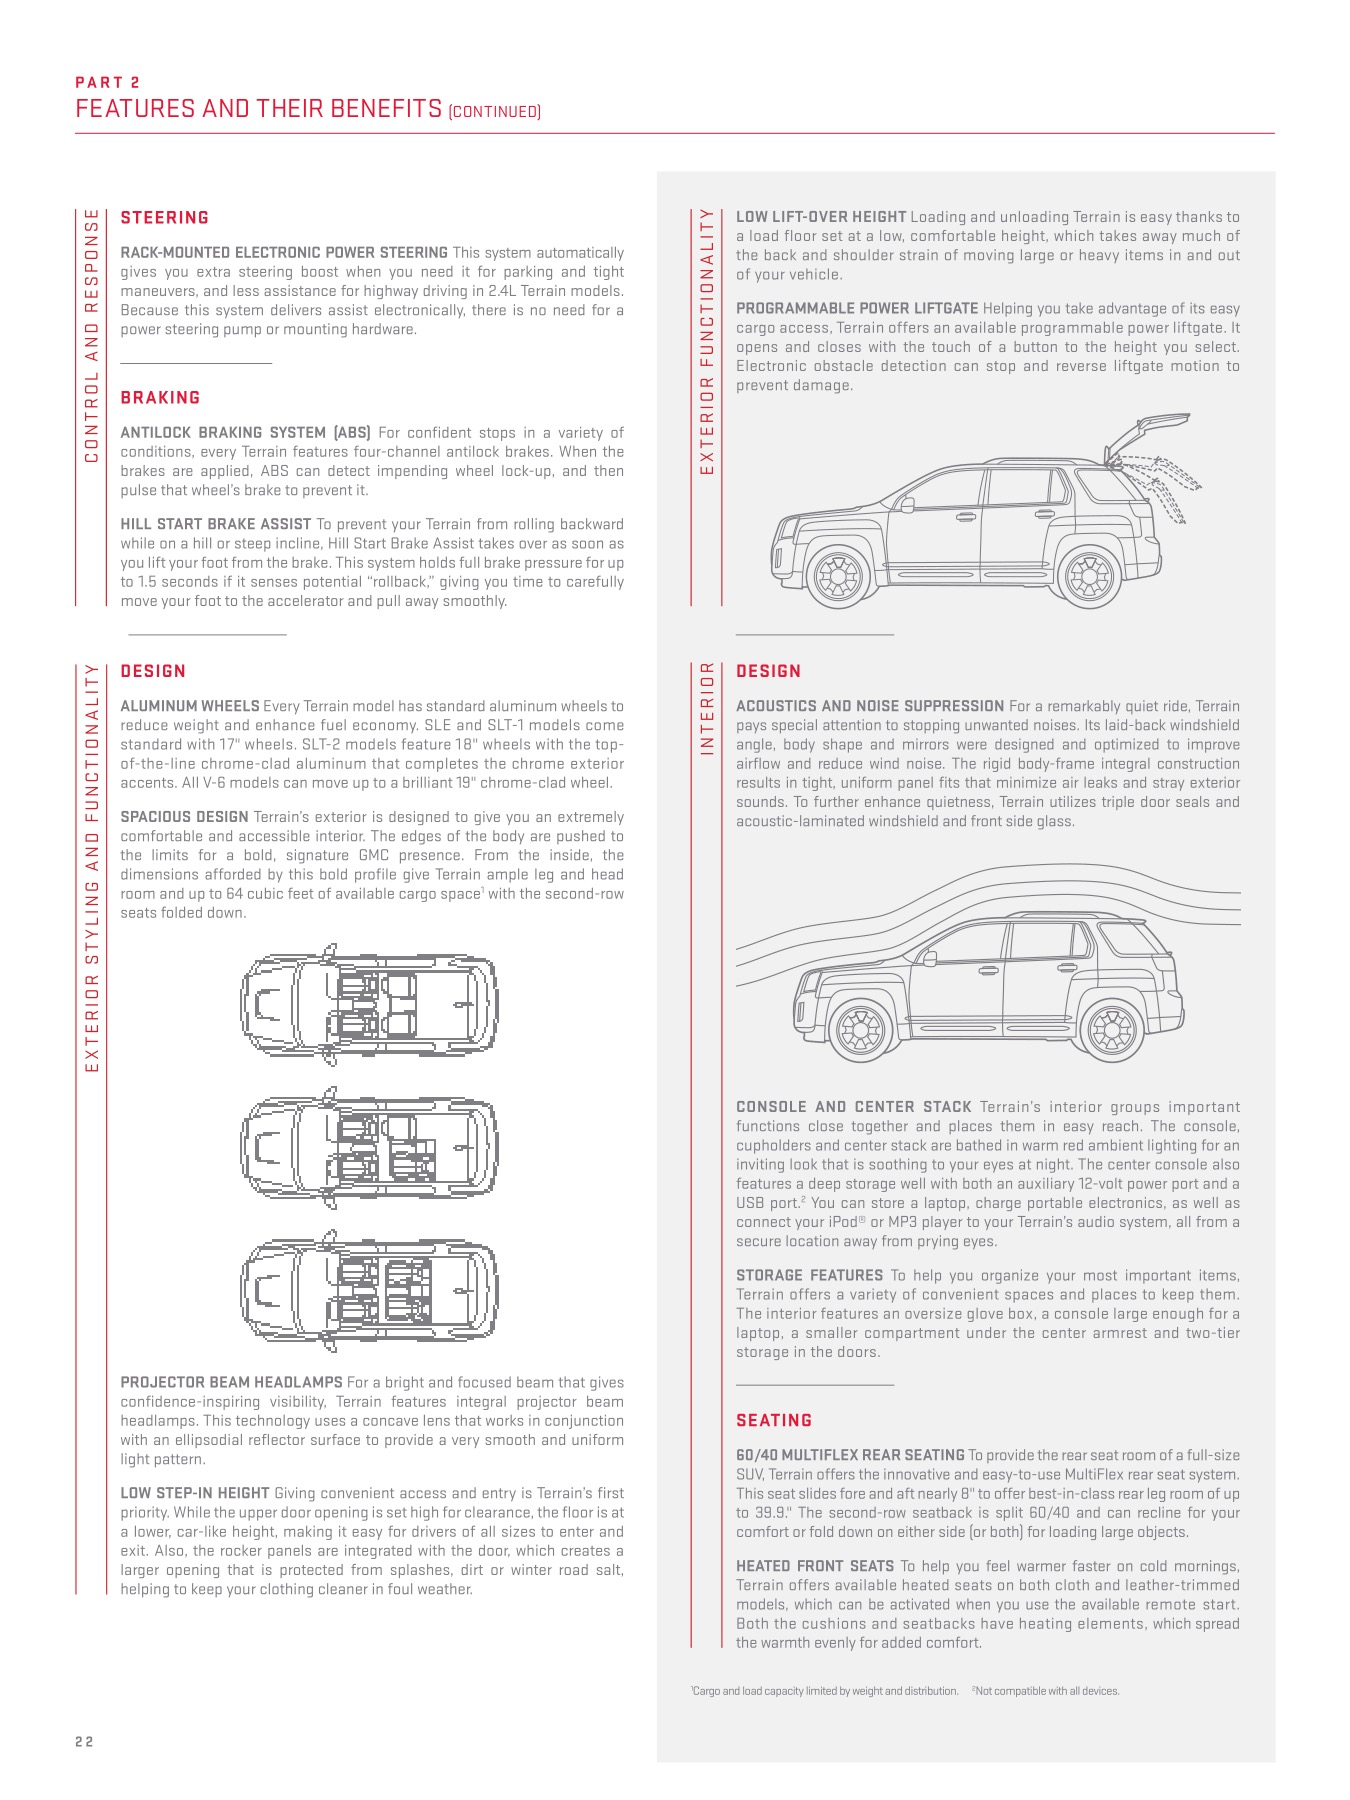 2012 GMC Terrain Brochure Page 12